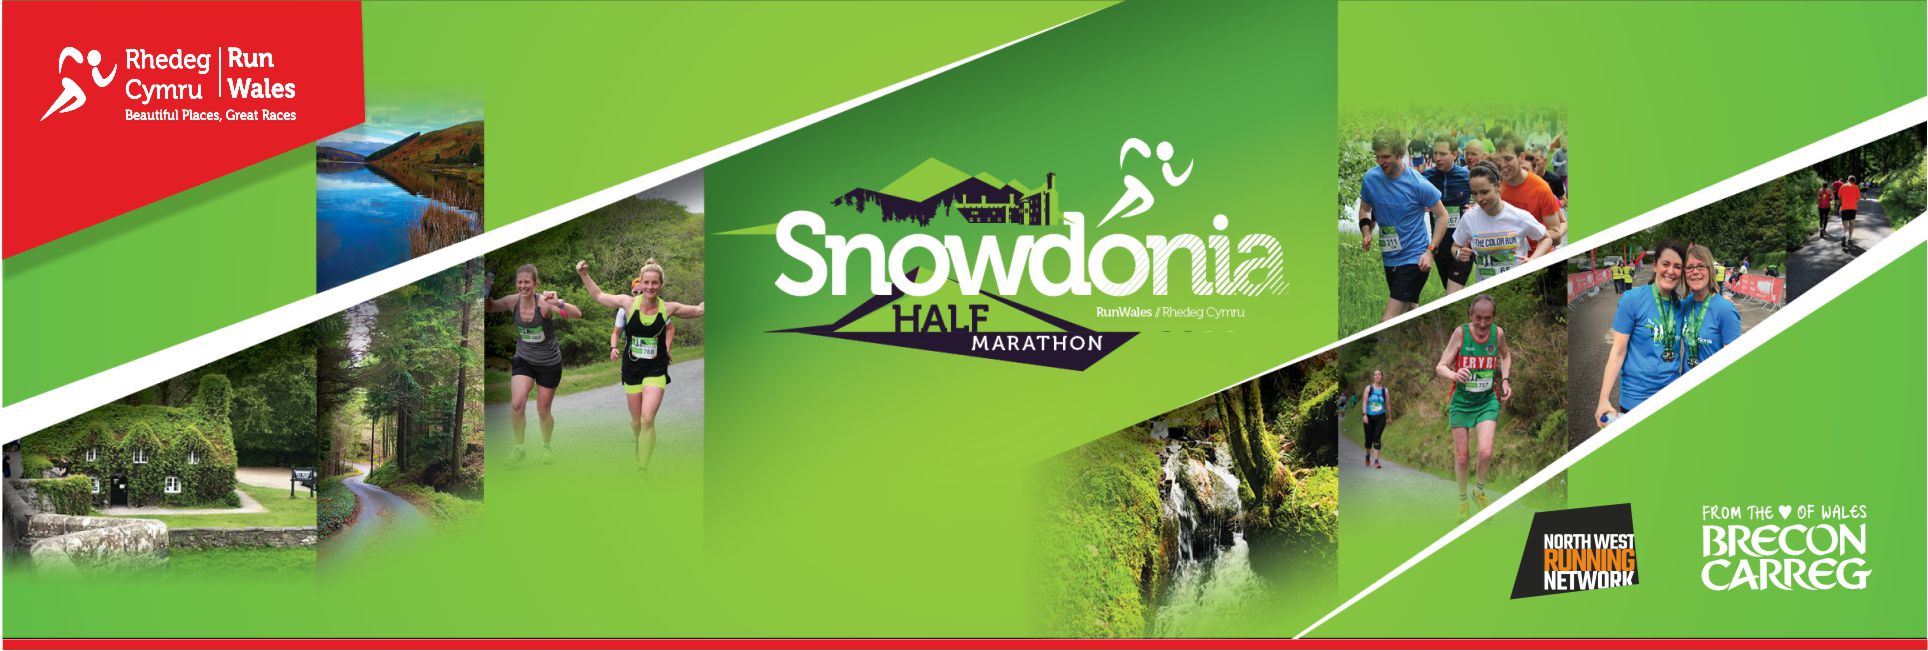 Snowdonia Half Marathon